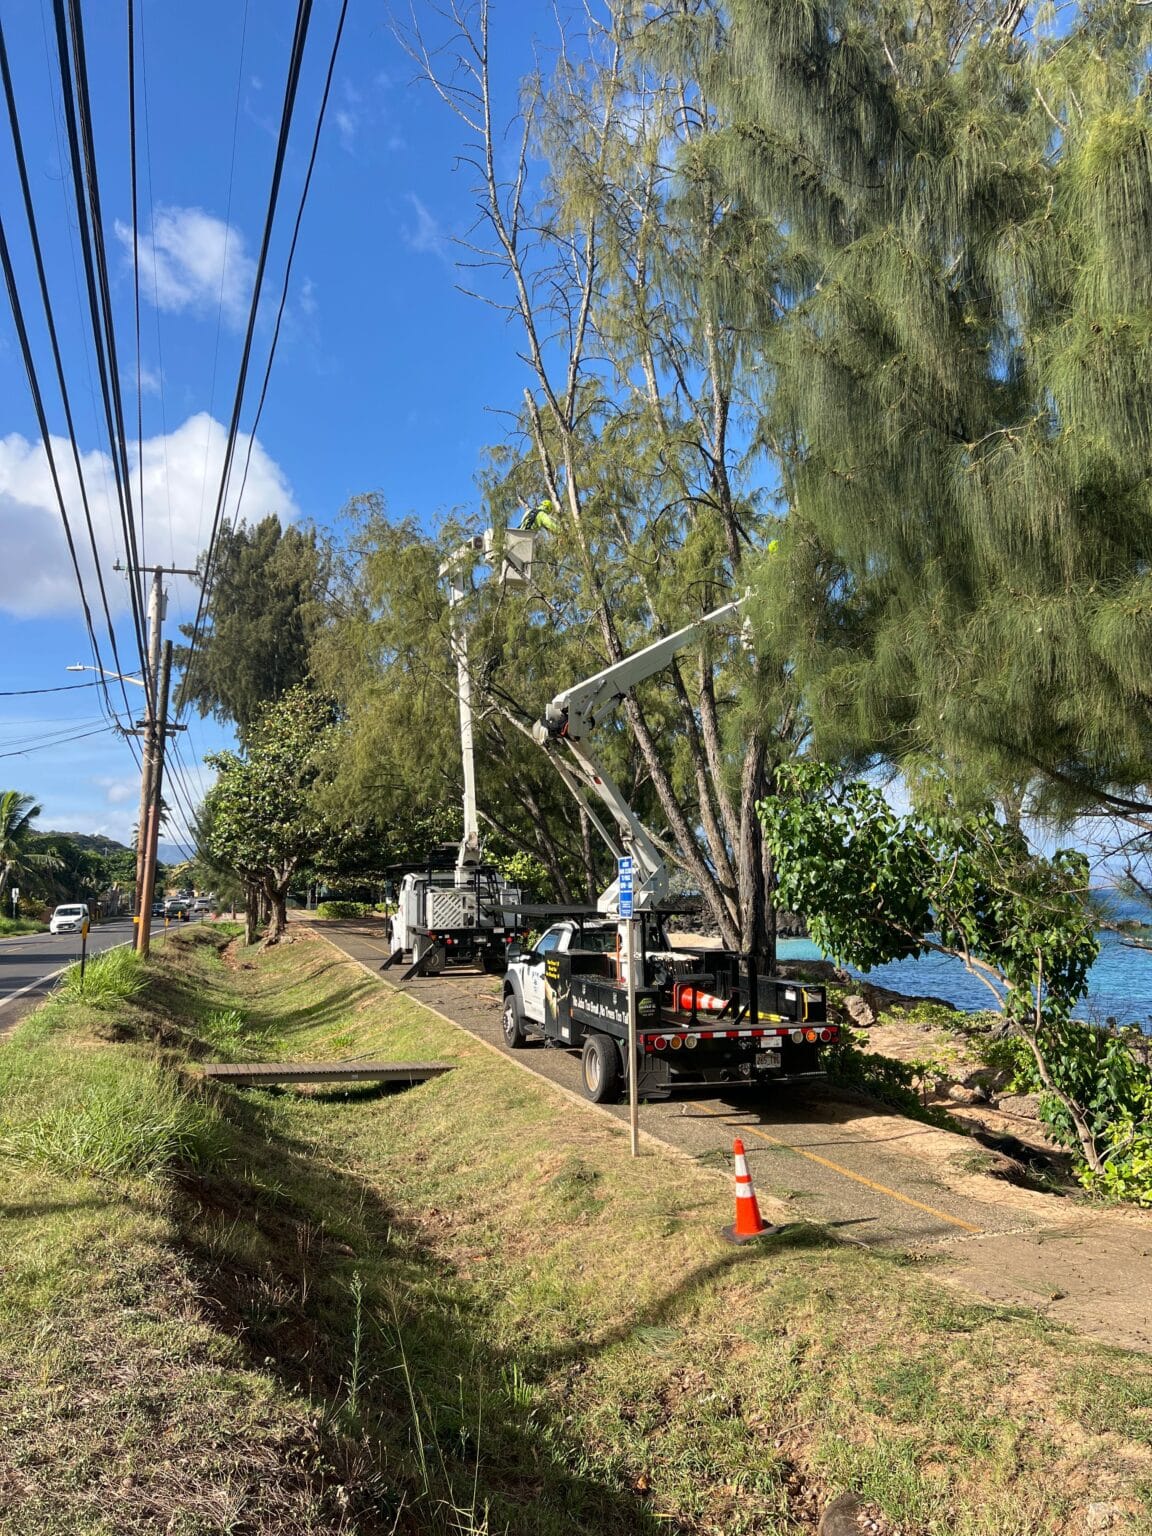 Tree Services In Hawaii - HTM Contractors